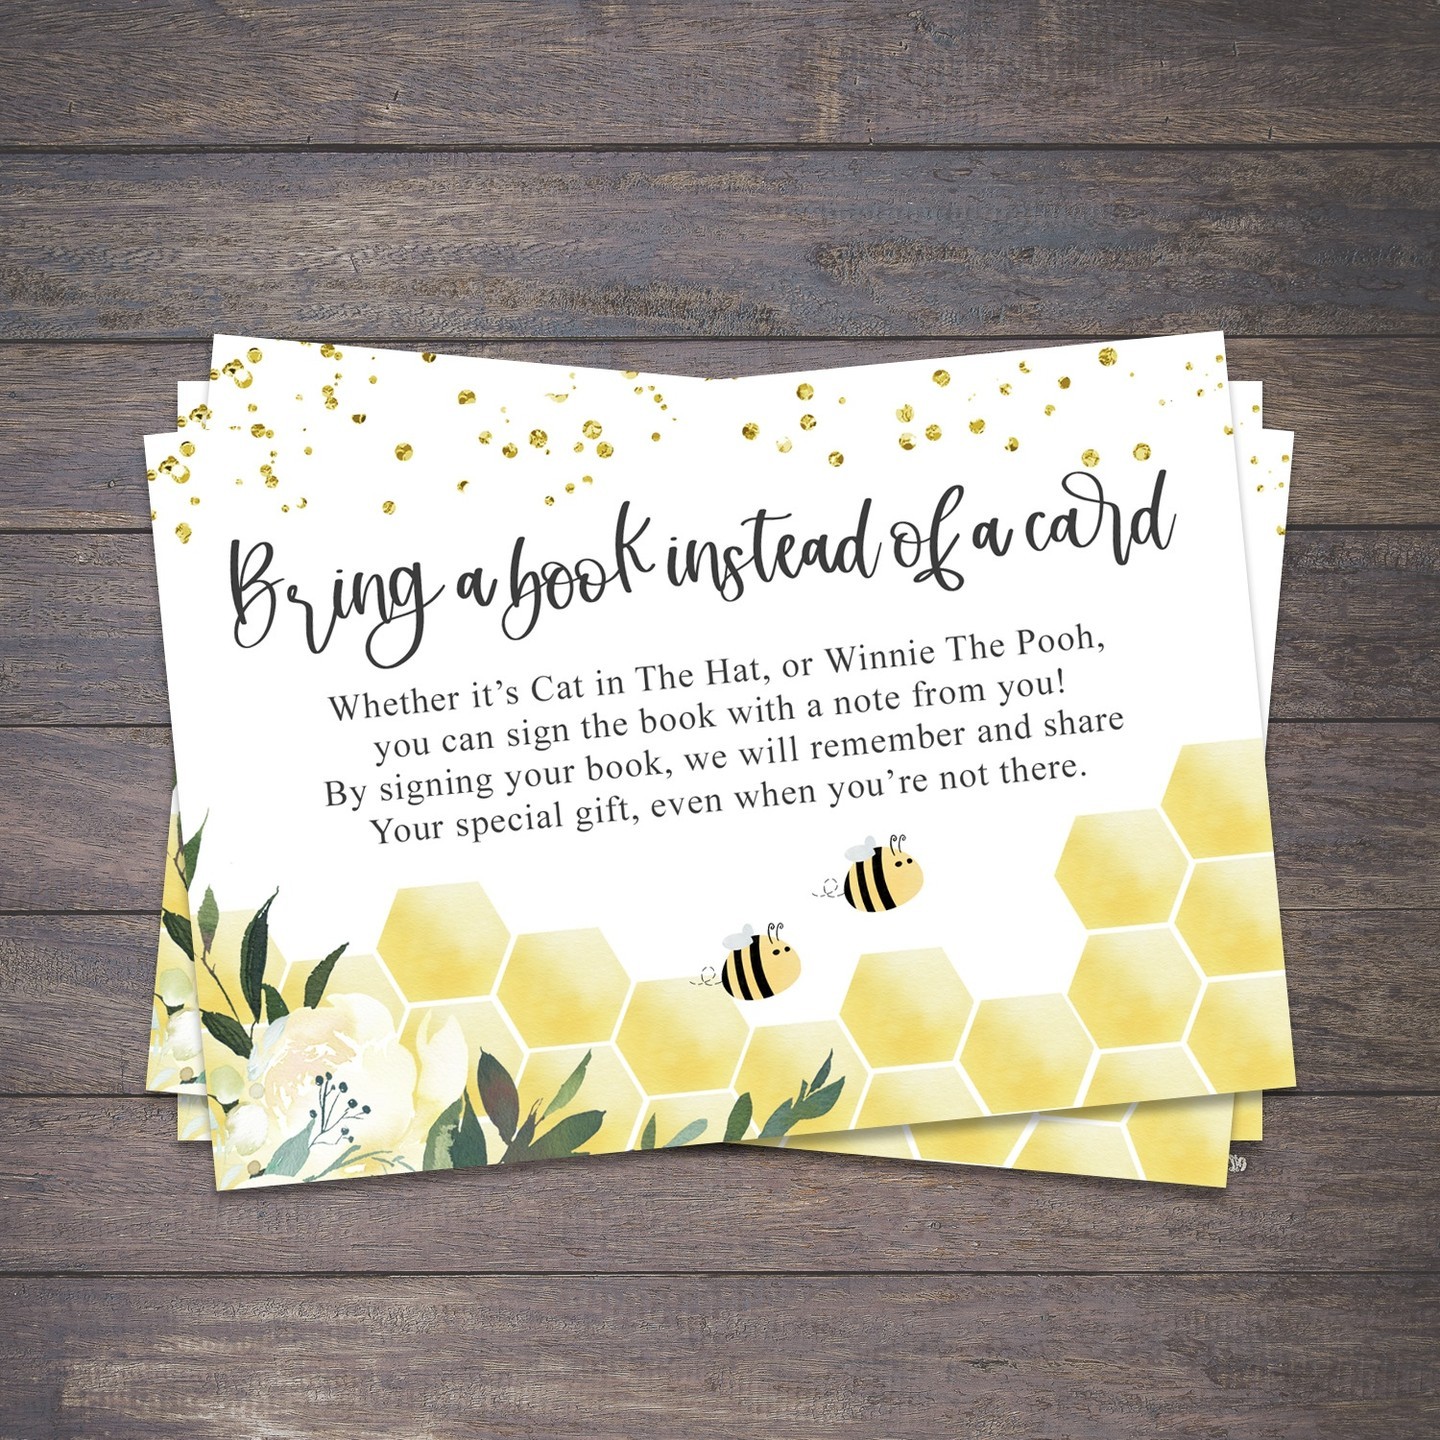 Cute Bee themed "bring a book" card inserts!⁠
Available in my Etsy shop (link in bio).⁠
.⁠
.⁠
.⁠
#beebabyshower #beeinvitation #bringabook #babyshower #racheldesignsshop